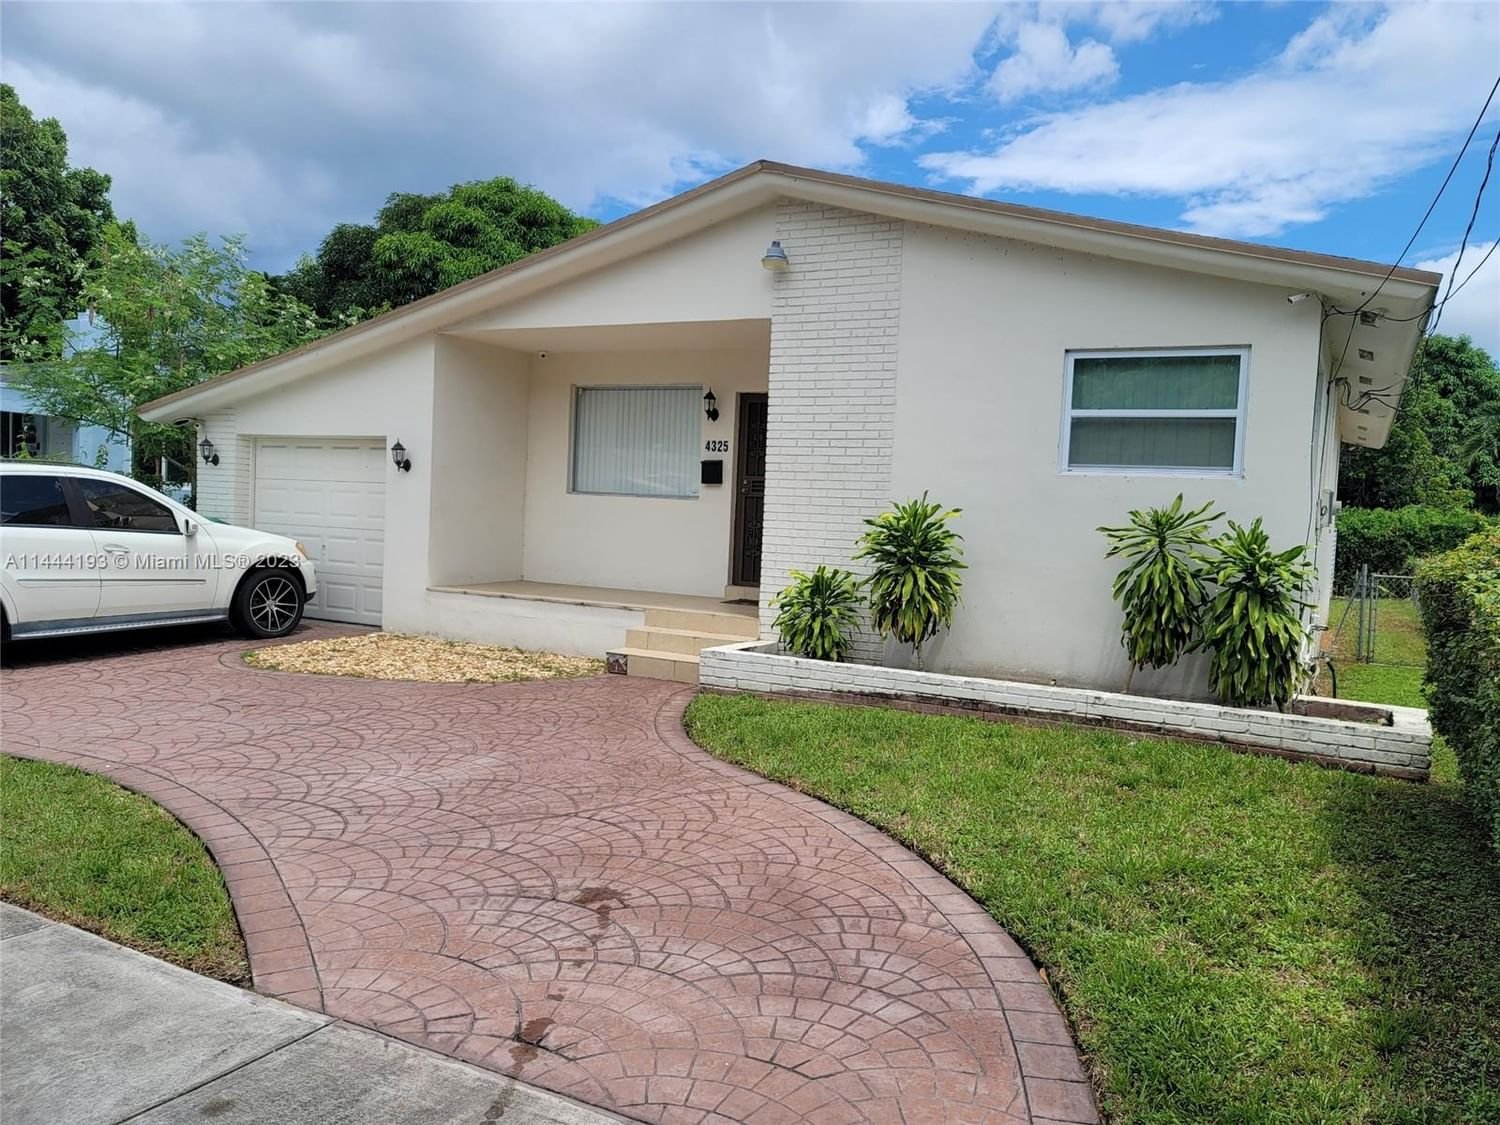 Real estate property located at 4325 10th Ave, Miami-Dade County, Miami, FL